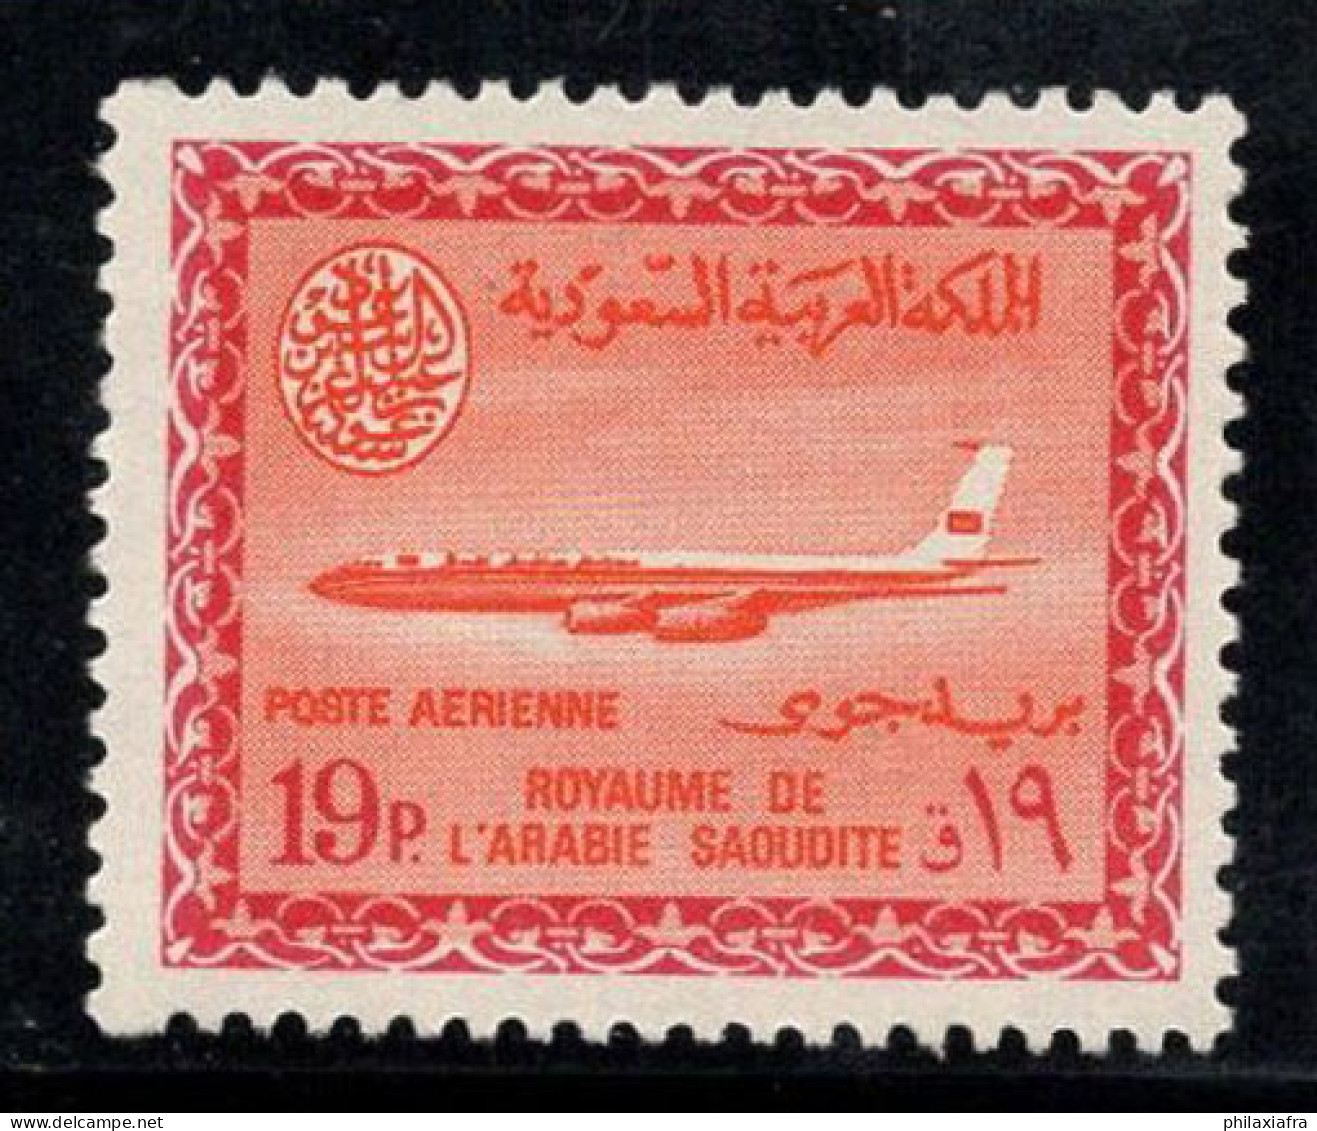 Arabie Saoudite 1965-72 Mi. 259 Neuf ** 100% Poste Aérienne 19 Pia, Boeing 720 B - Saoedi-Arabië